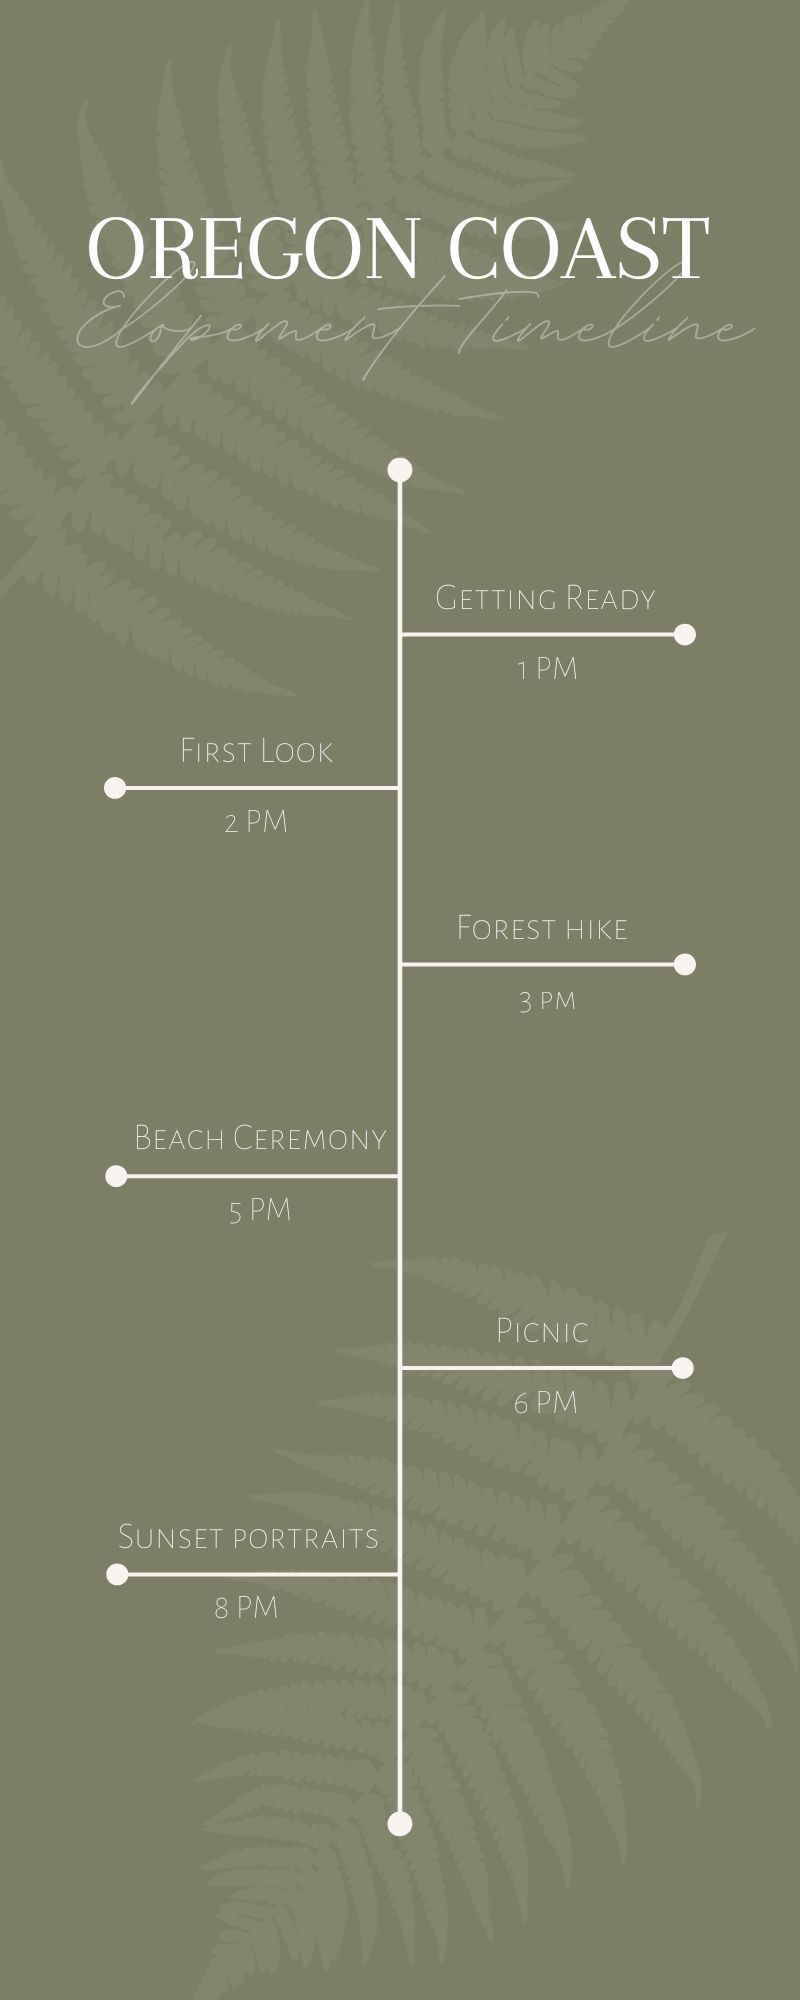 Oregon Coast Elopement Timeline